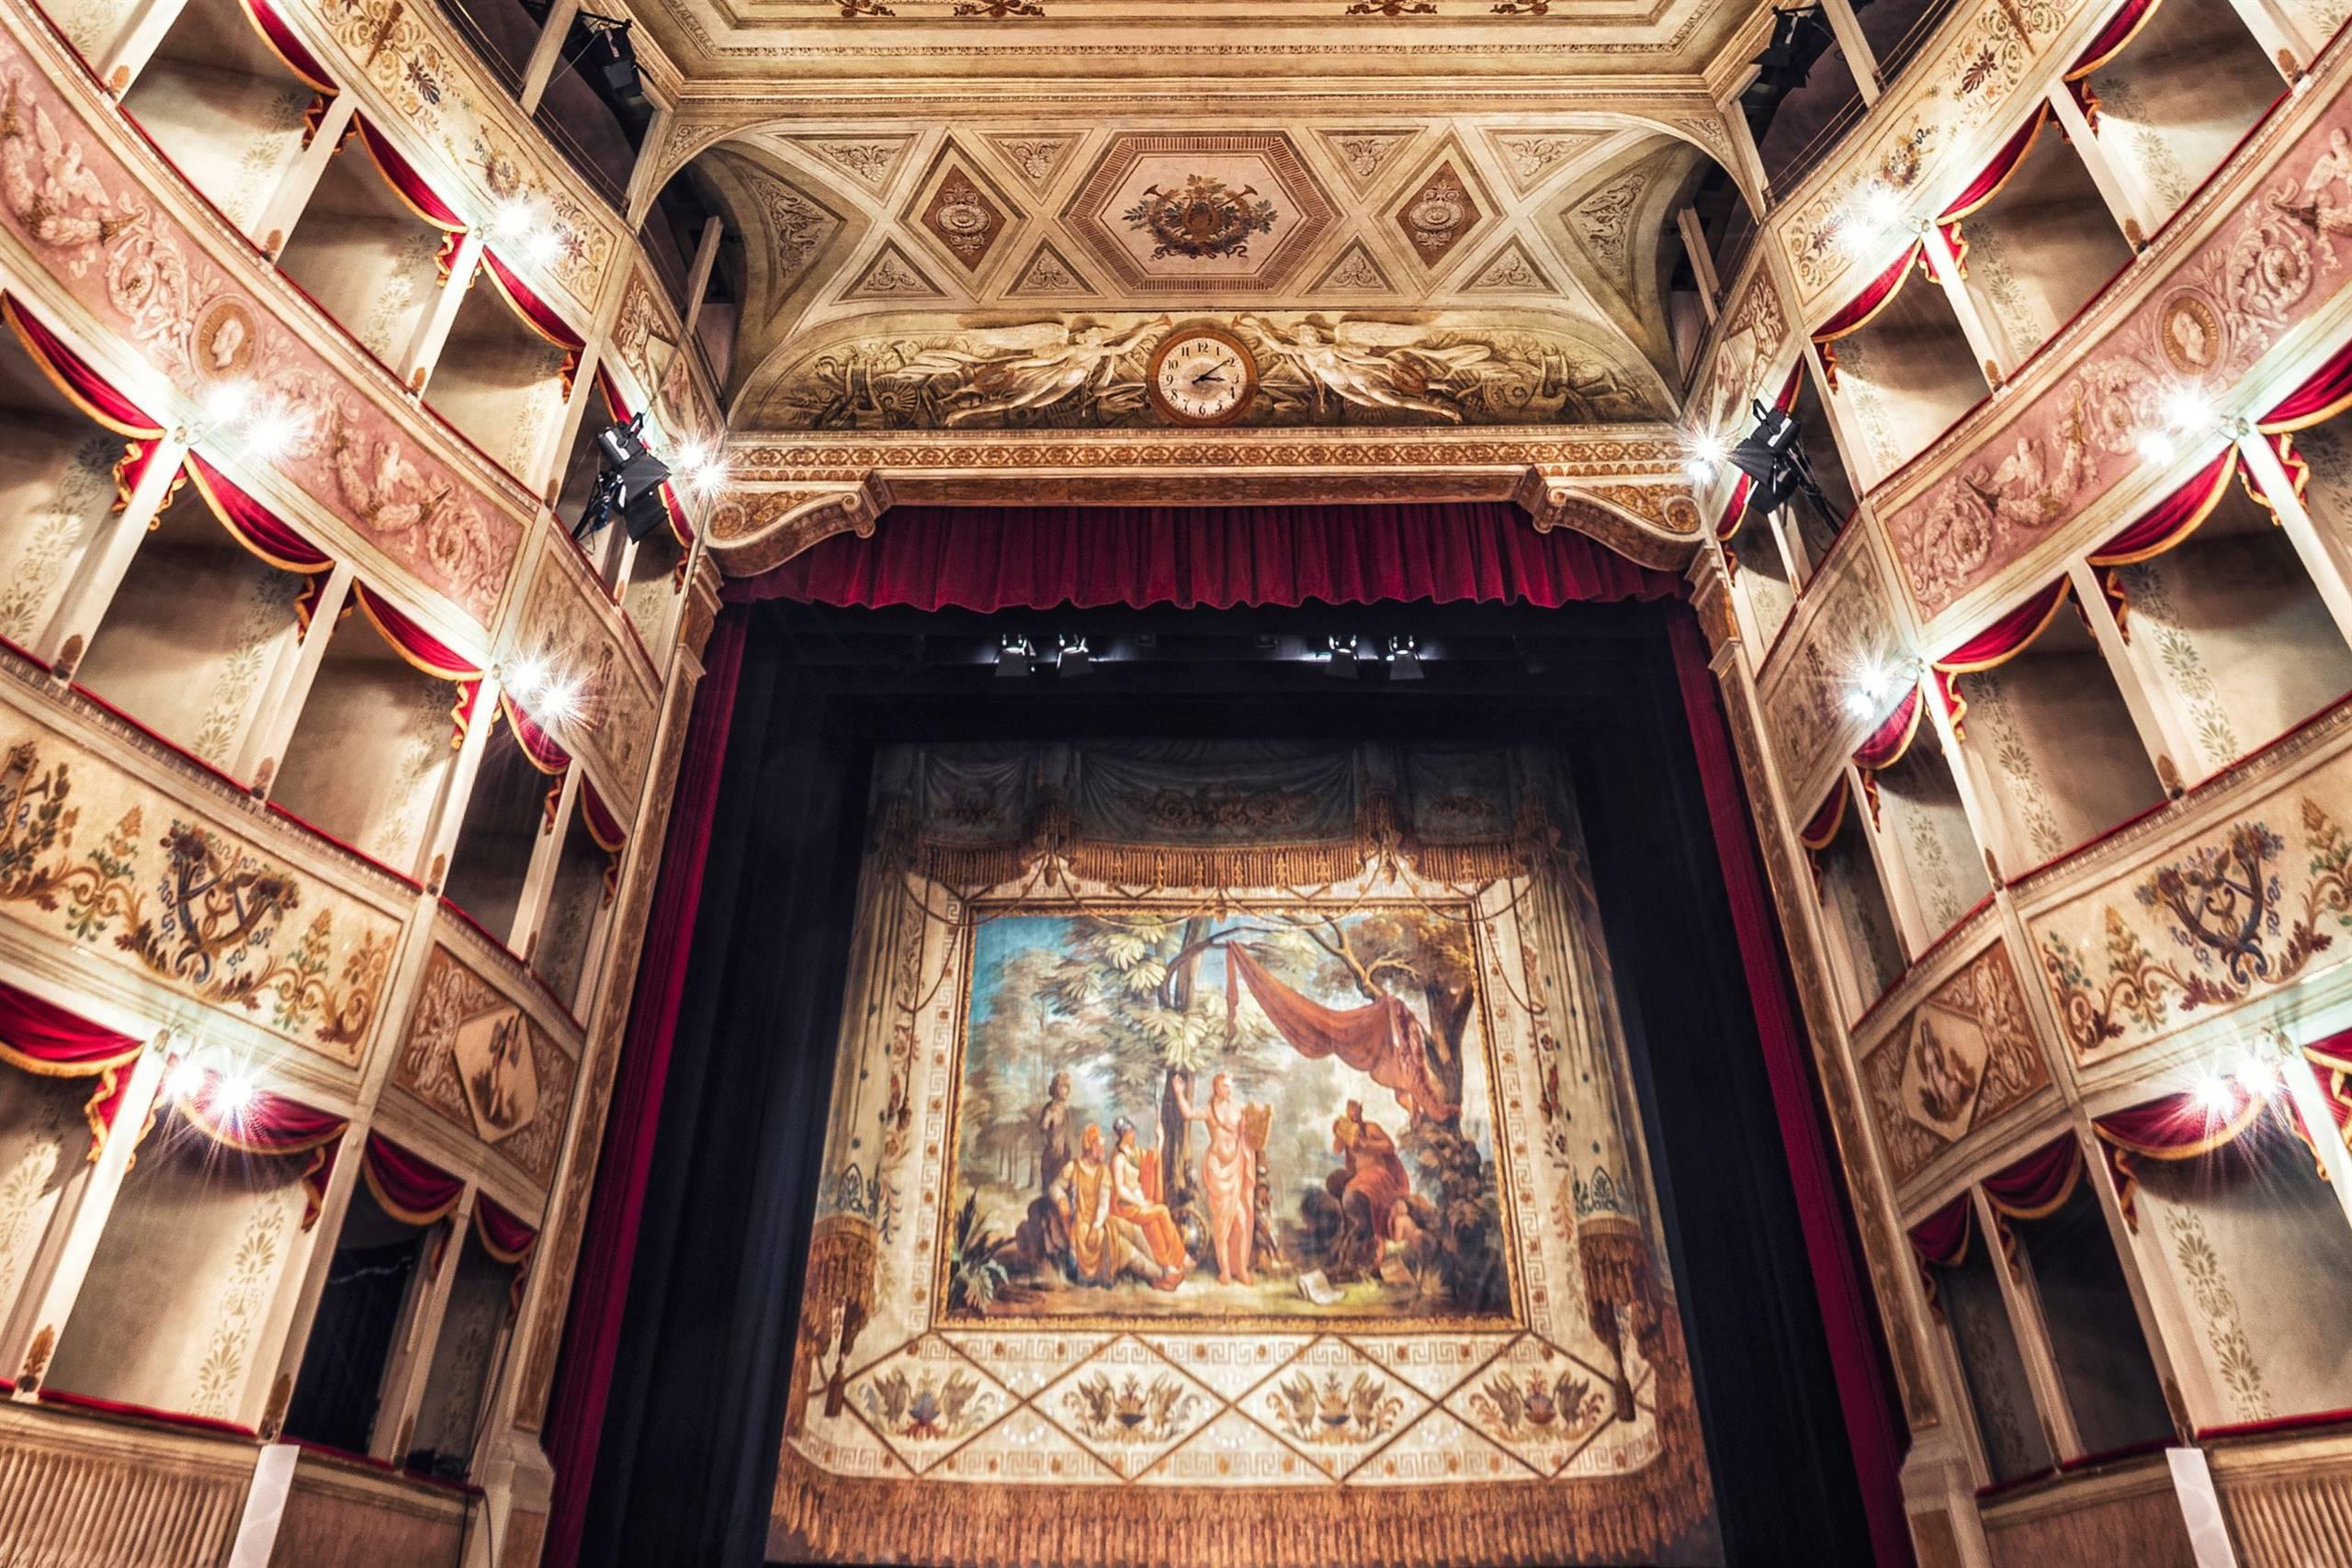 Teatro della Sena